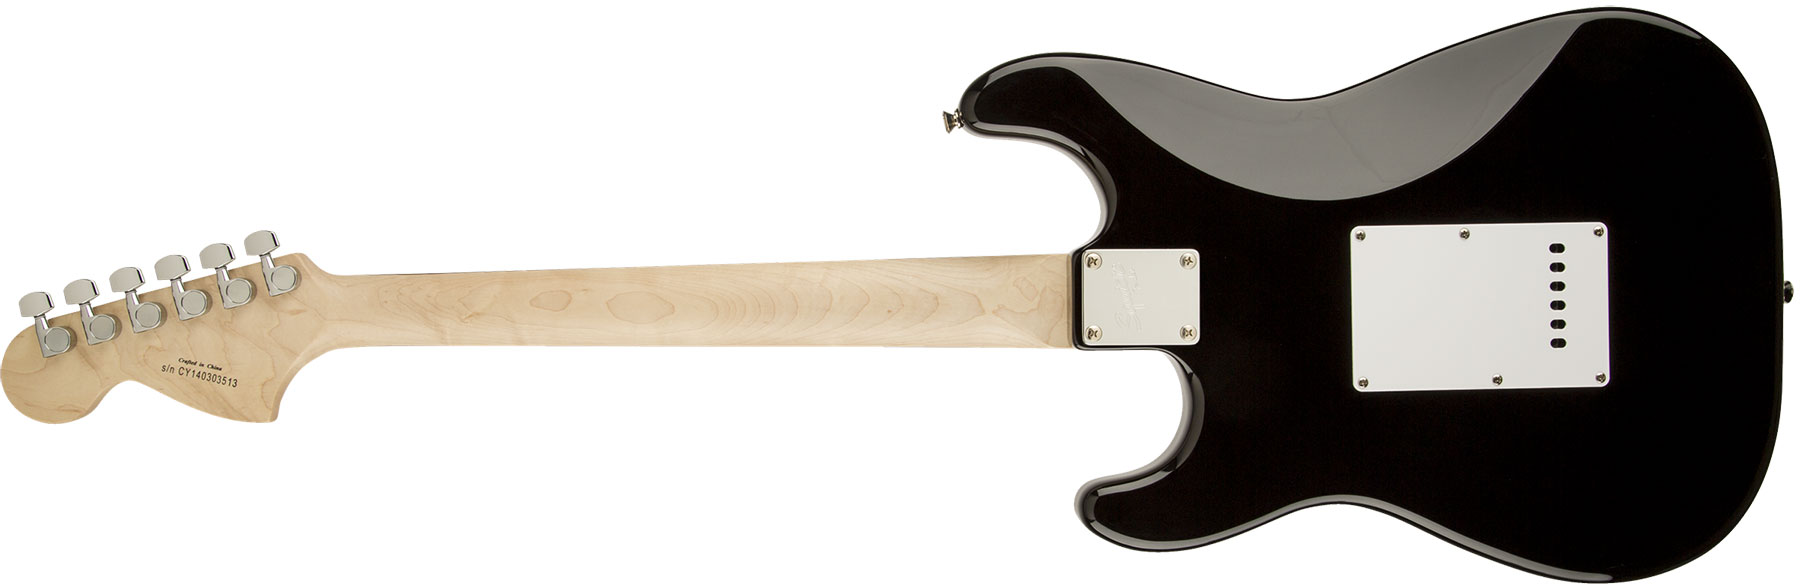 Squier Strat Affinity Series 3s Lau - Black - Str shape electric guitar - Variation 1